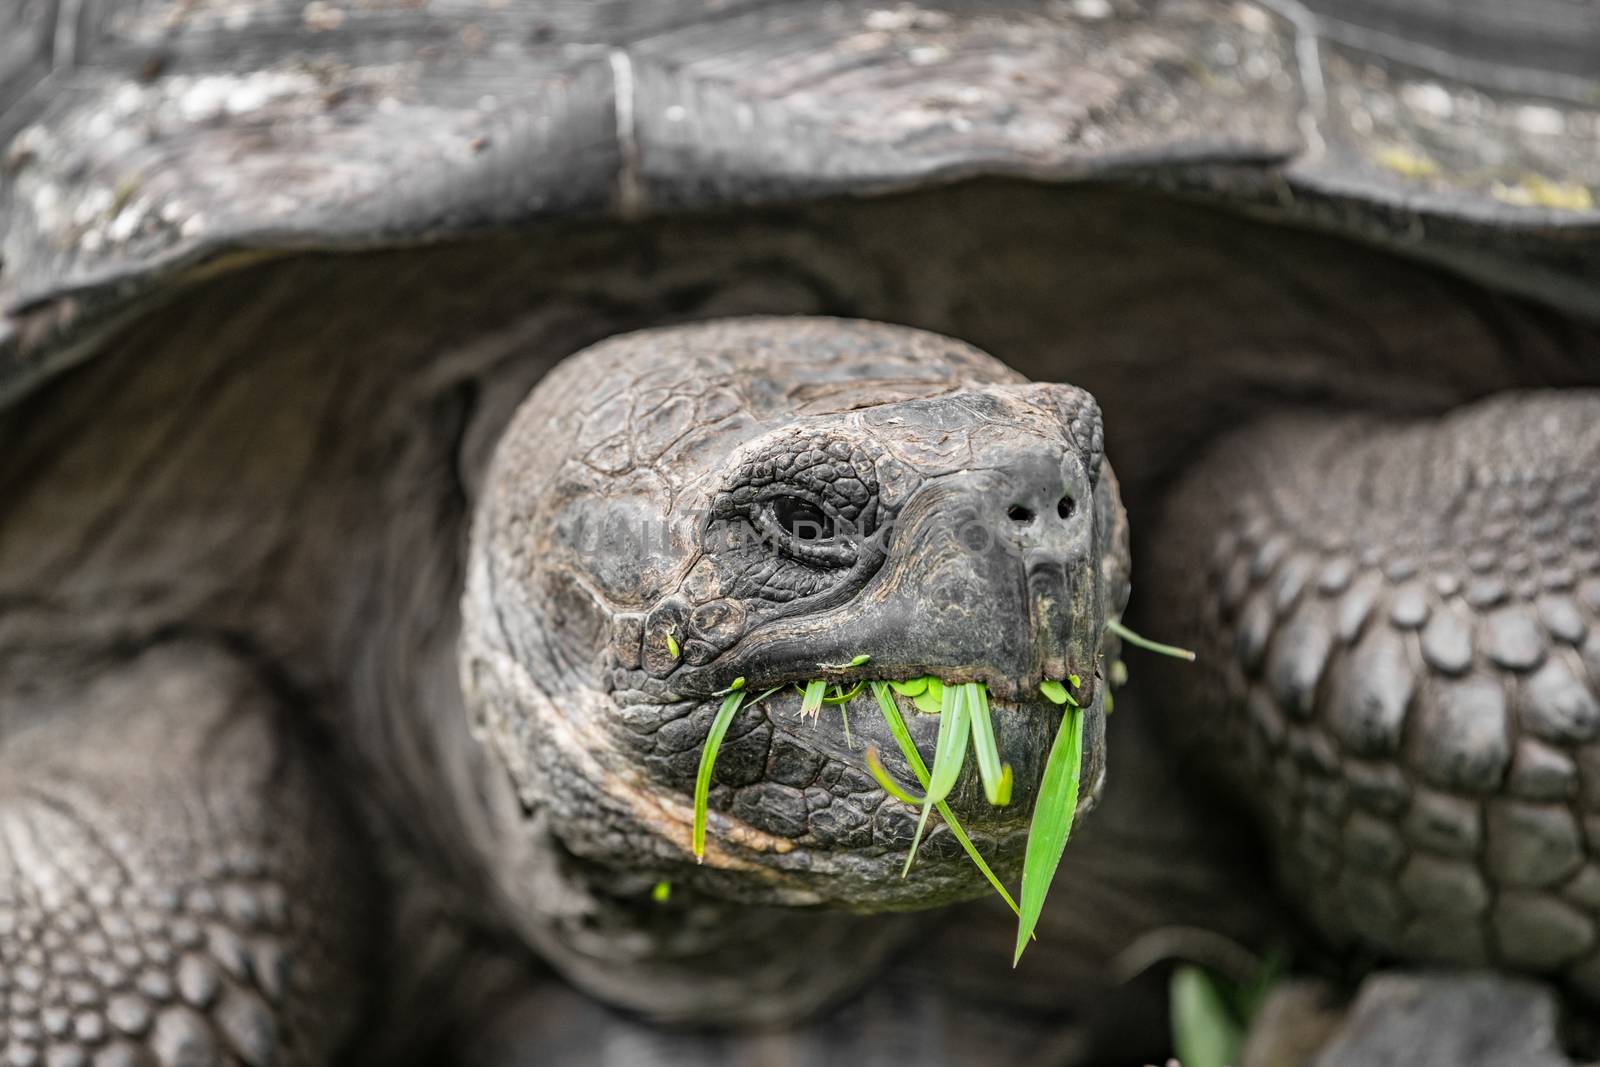 Galapagos Giant Tortoise eating grass on Santa Cruz Island in Galapagos Islands by Maridav